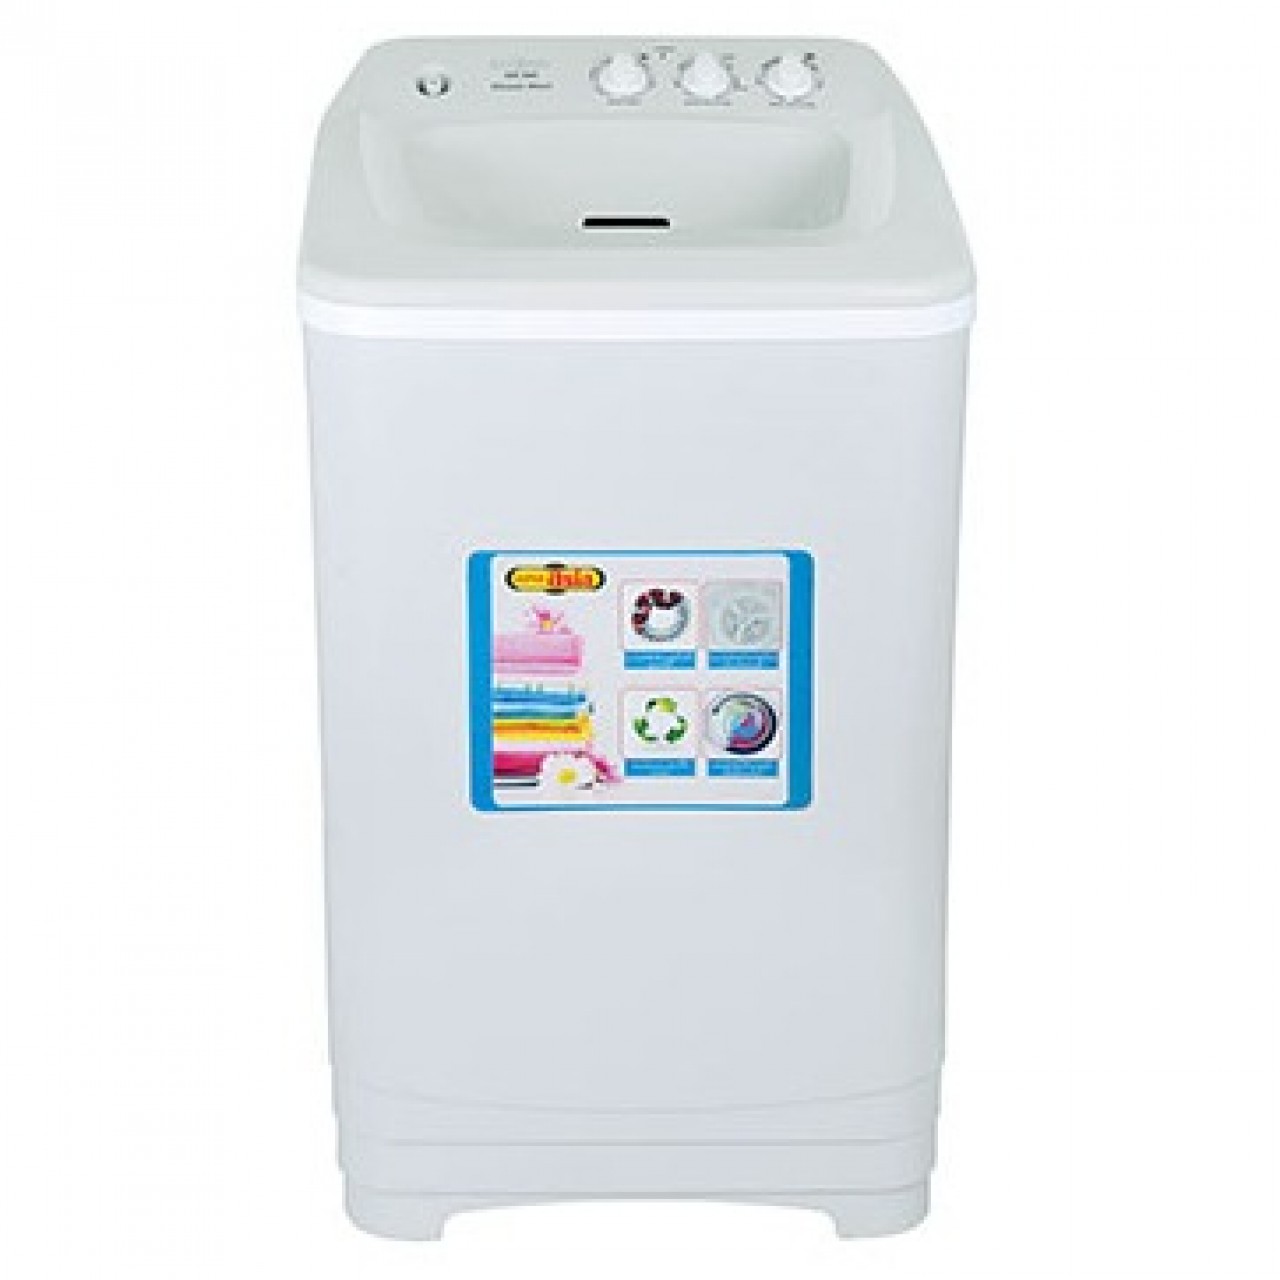 Super Asia SA-240 Double Body Washing Machine - Capacity12Kg